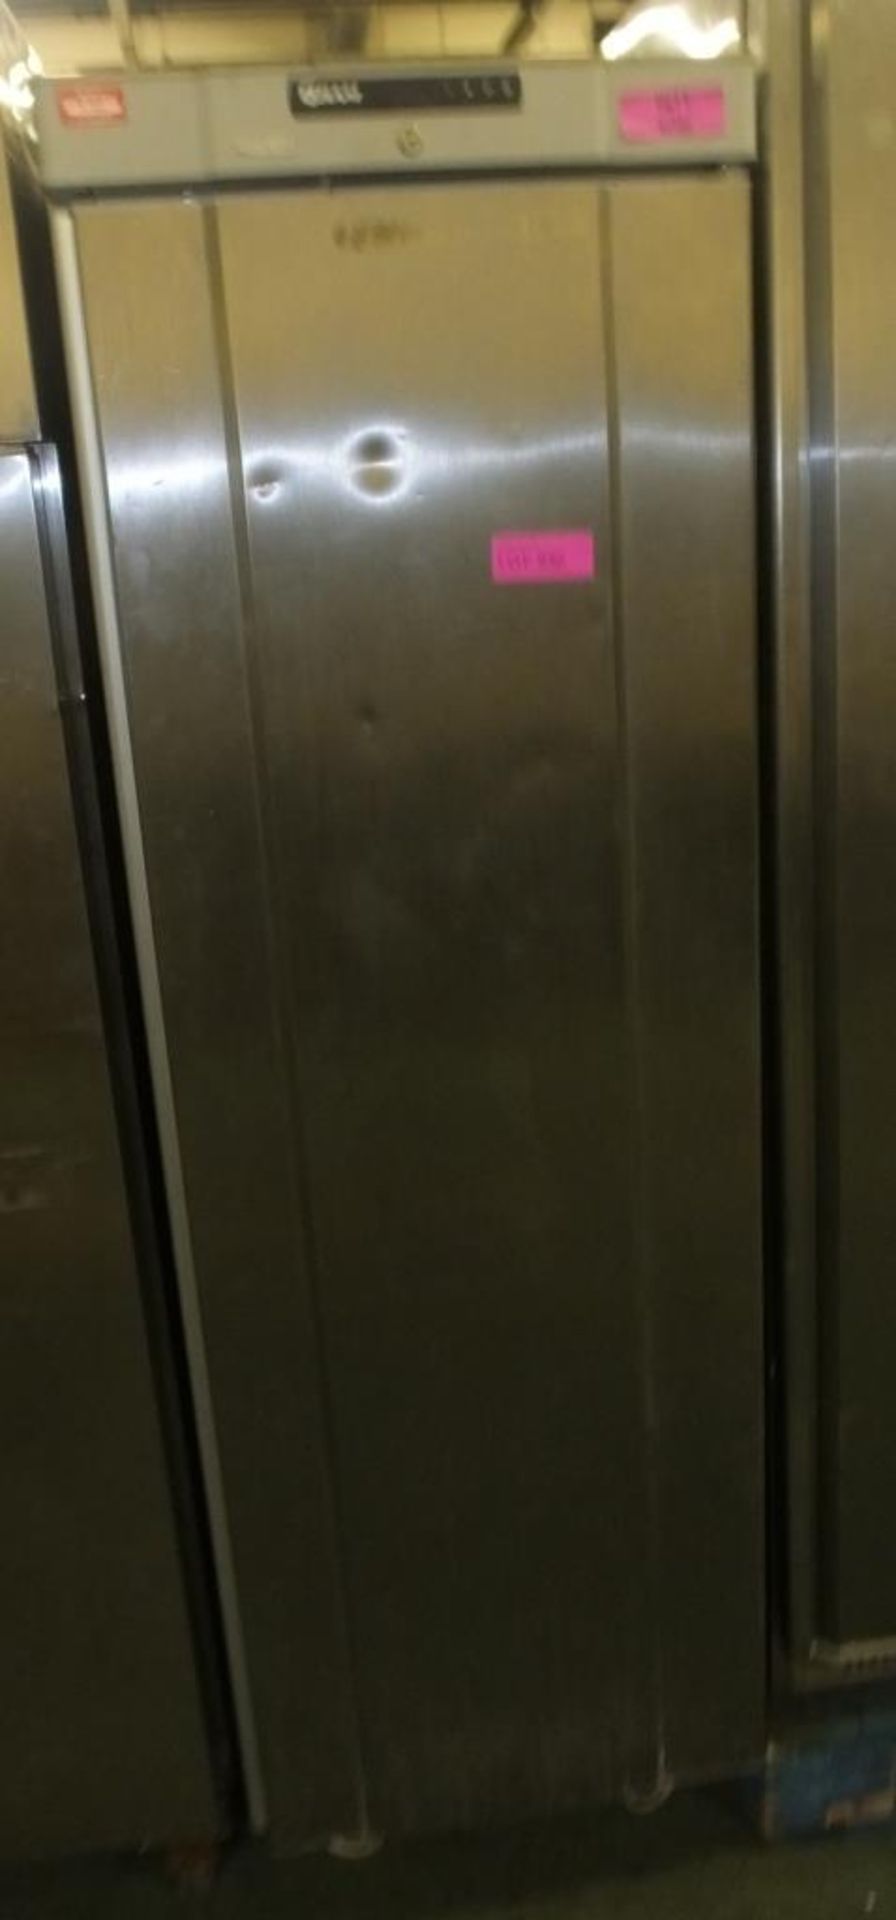 AS SPARES OR REPAIRS - Gram single door fridge